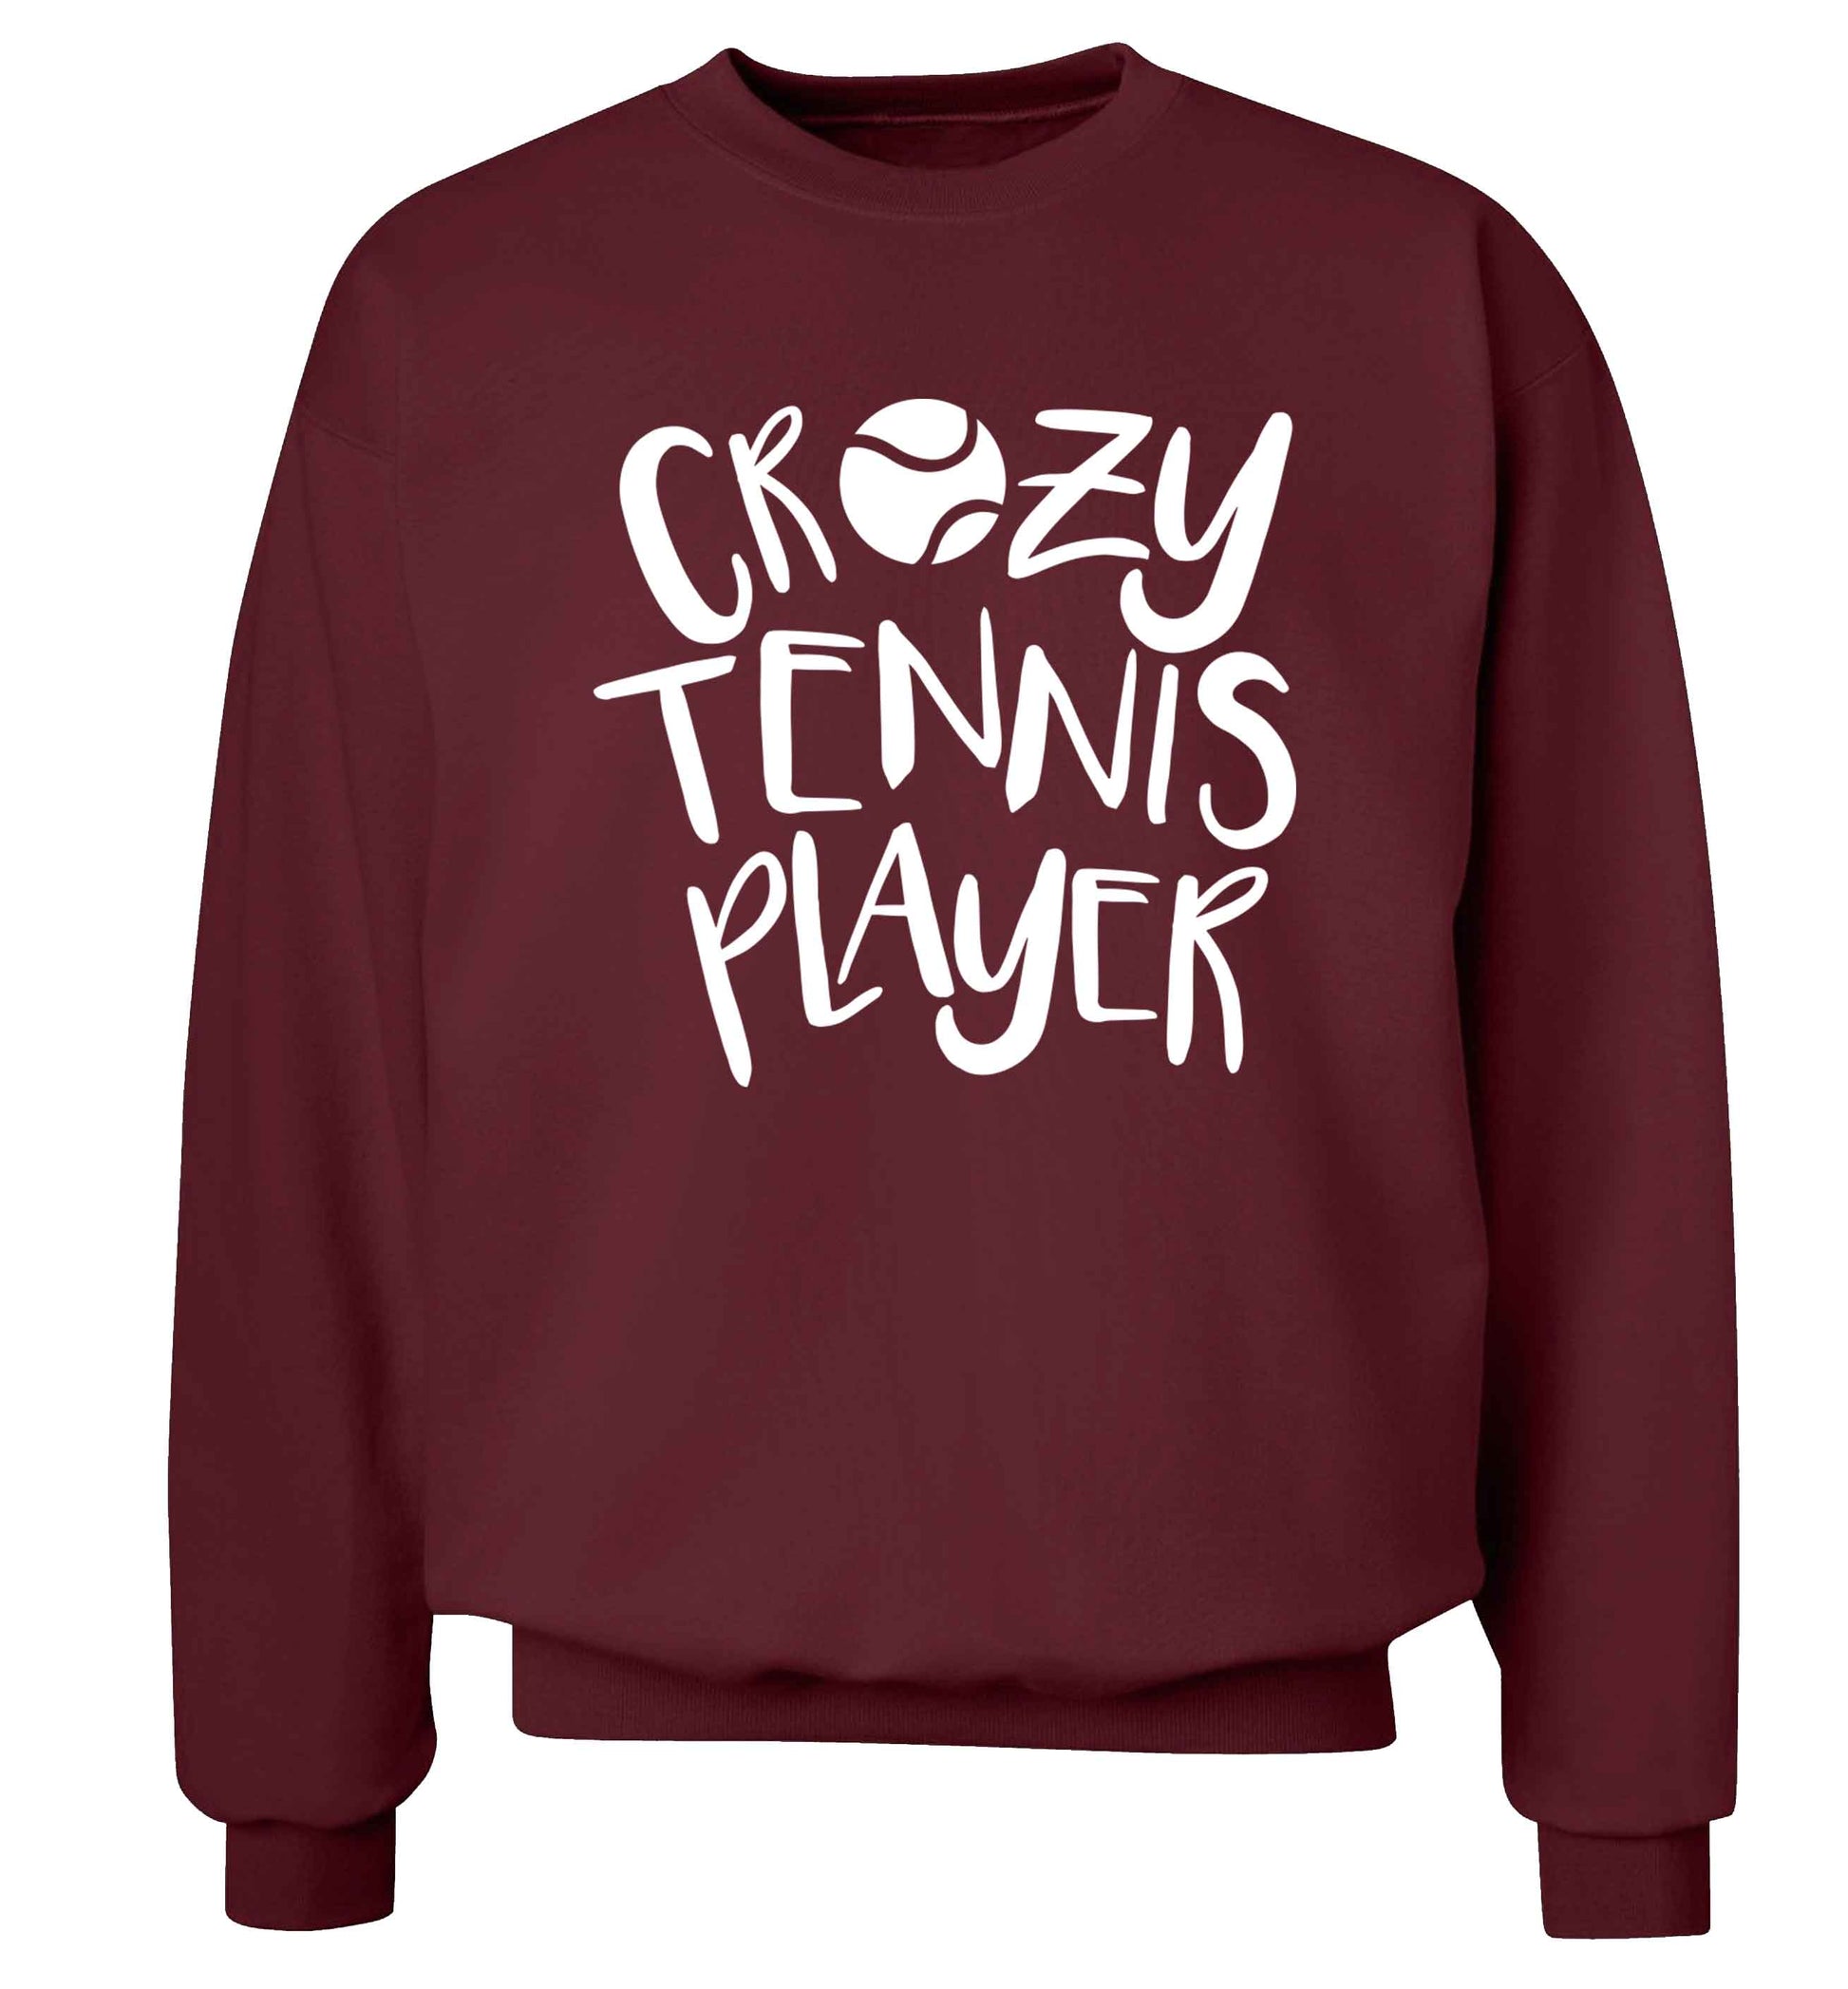 Crazy tennis player Adult's unisex maroon Sweater 2XL